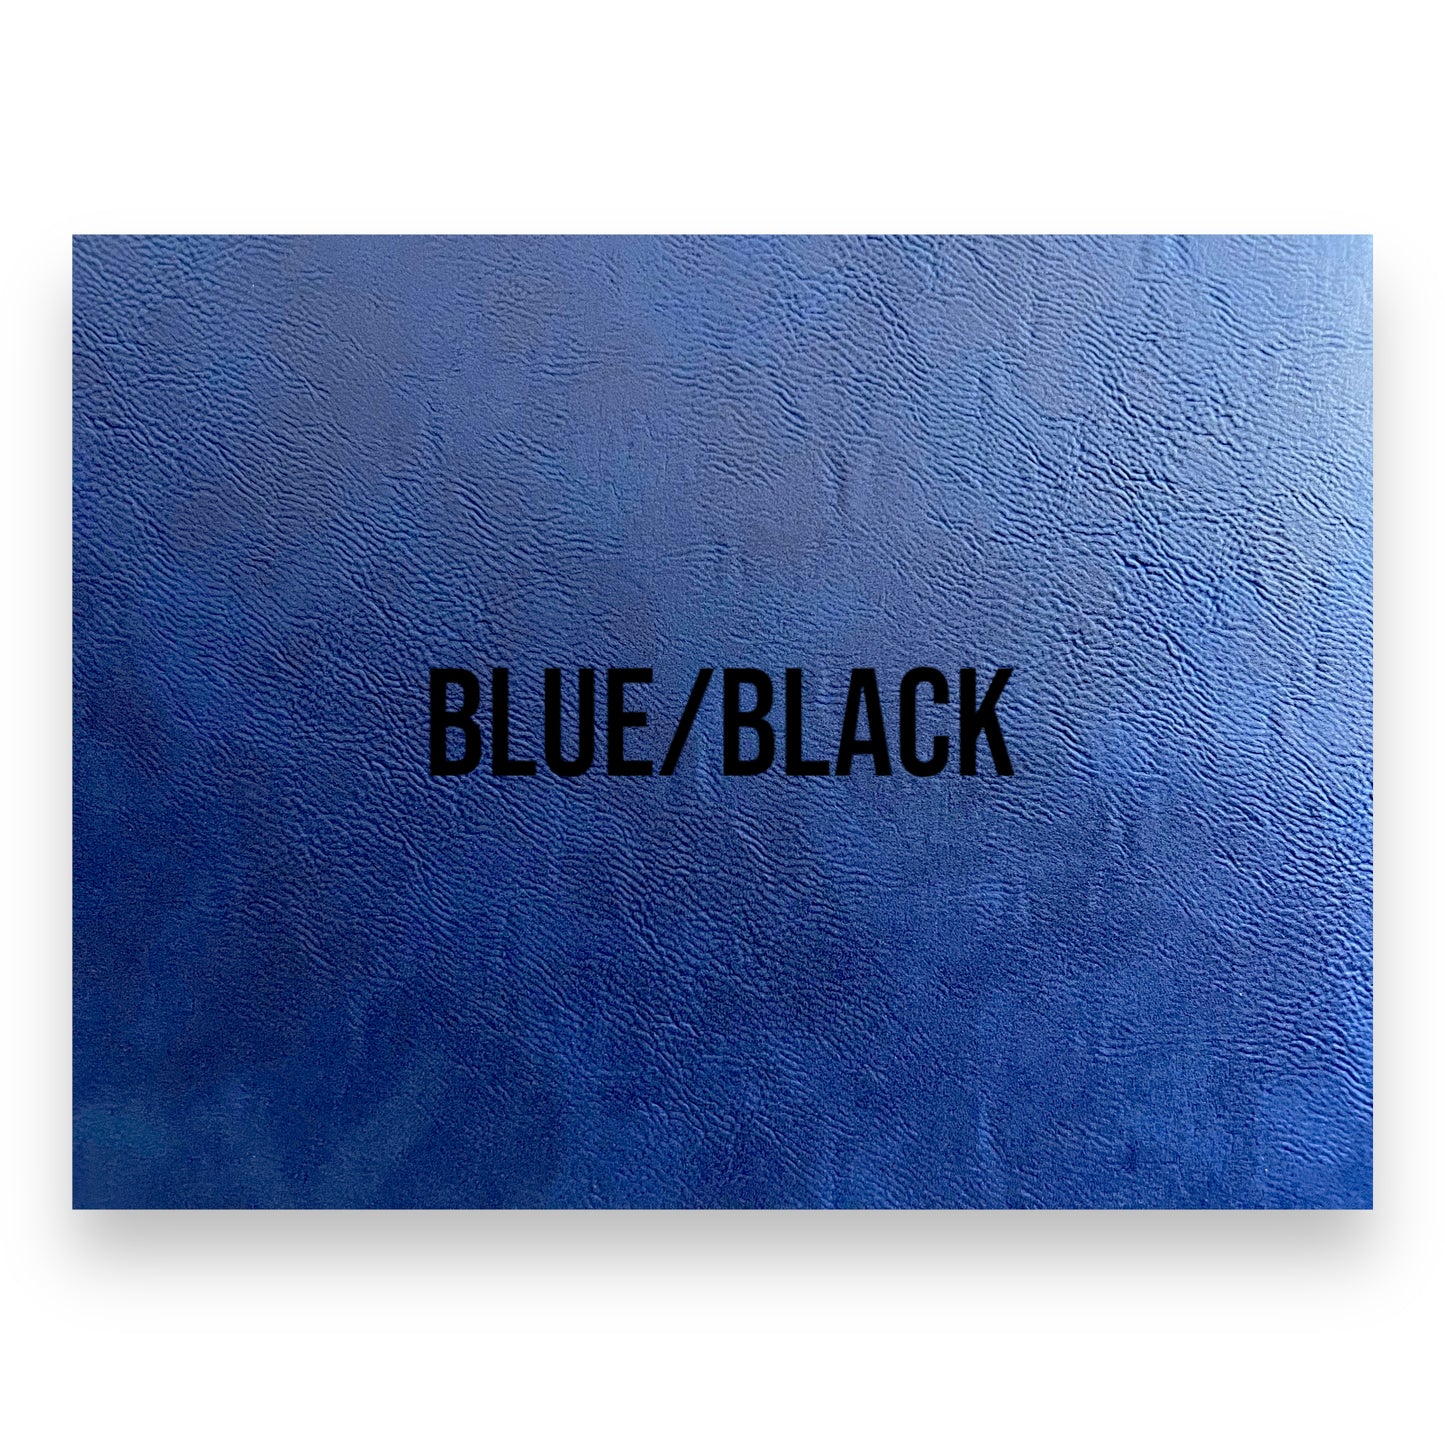 BLUE/BLACK HYDBOND’D LEATHERETTE SHEET (12"x24")